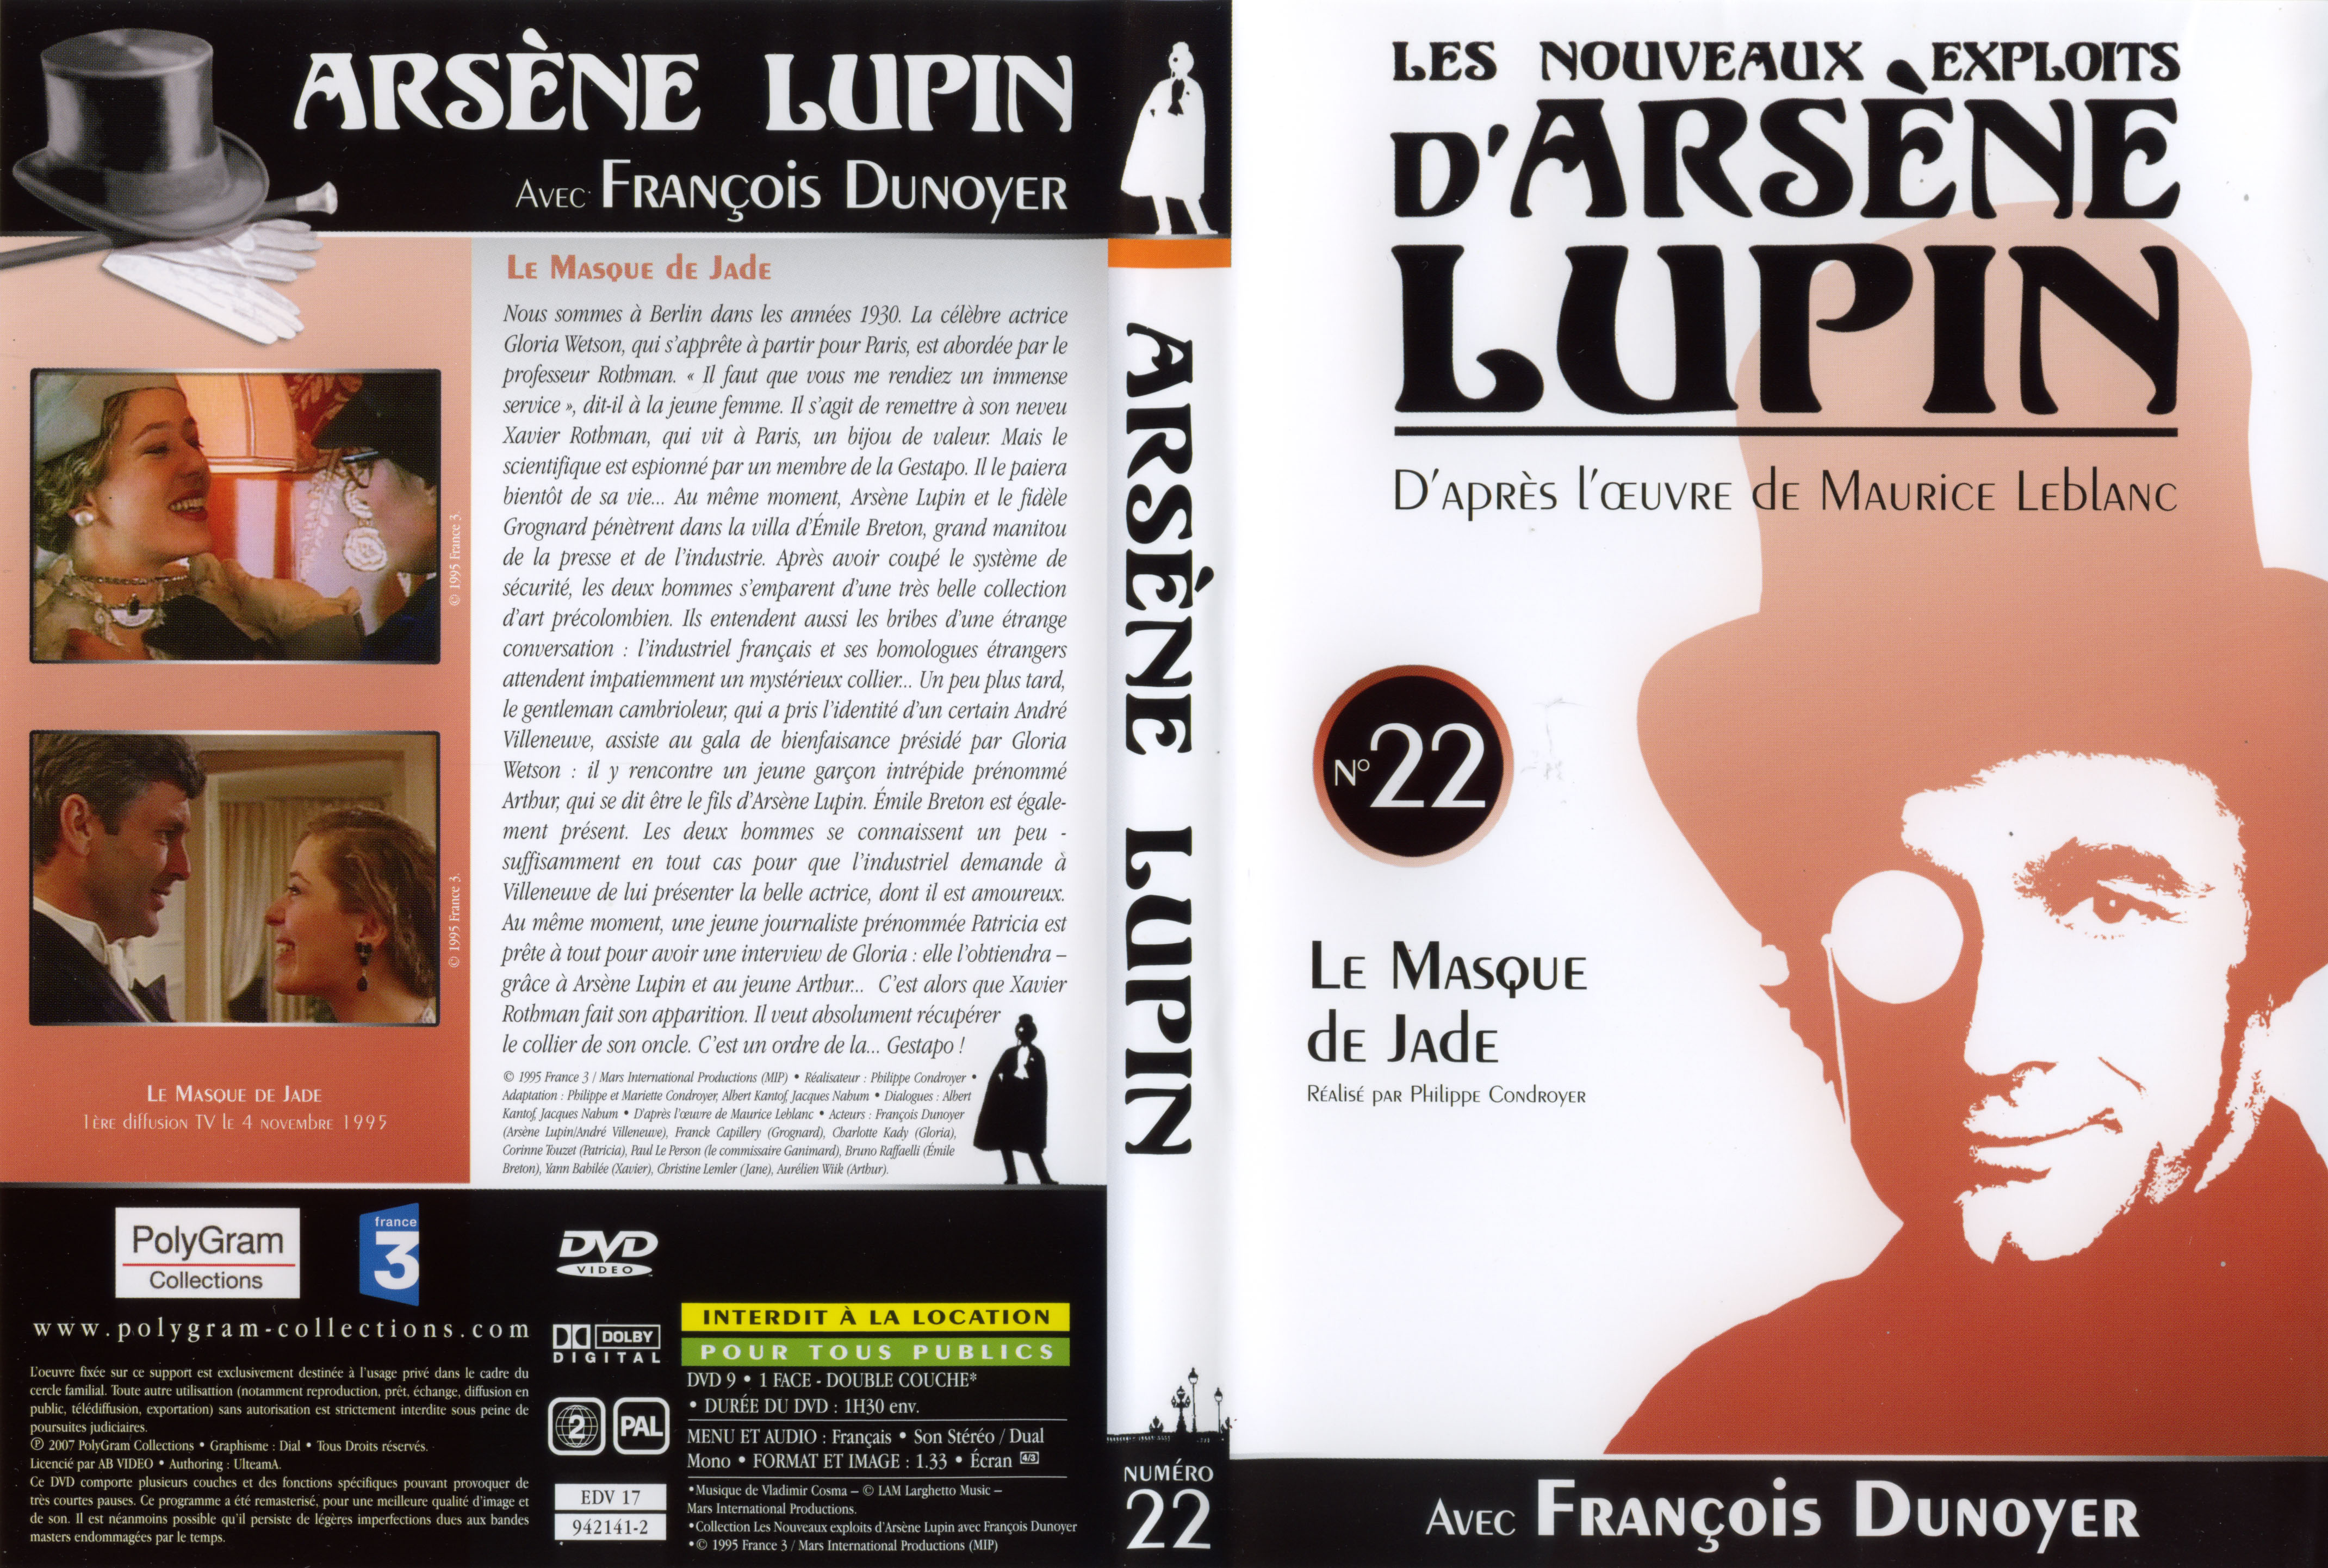 Jaquette DVD Arsene Lupin DVD 22